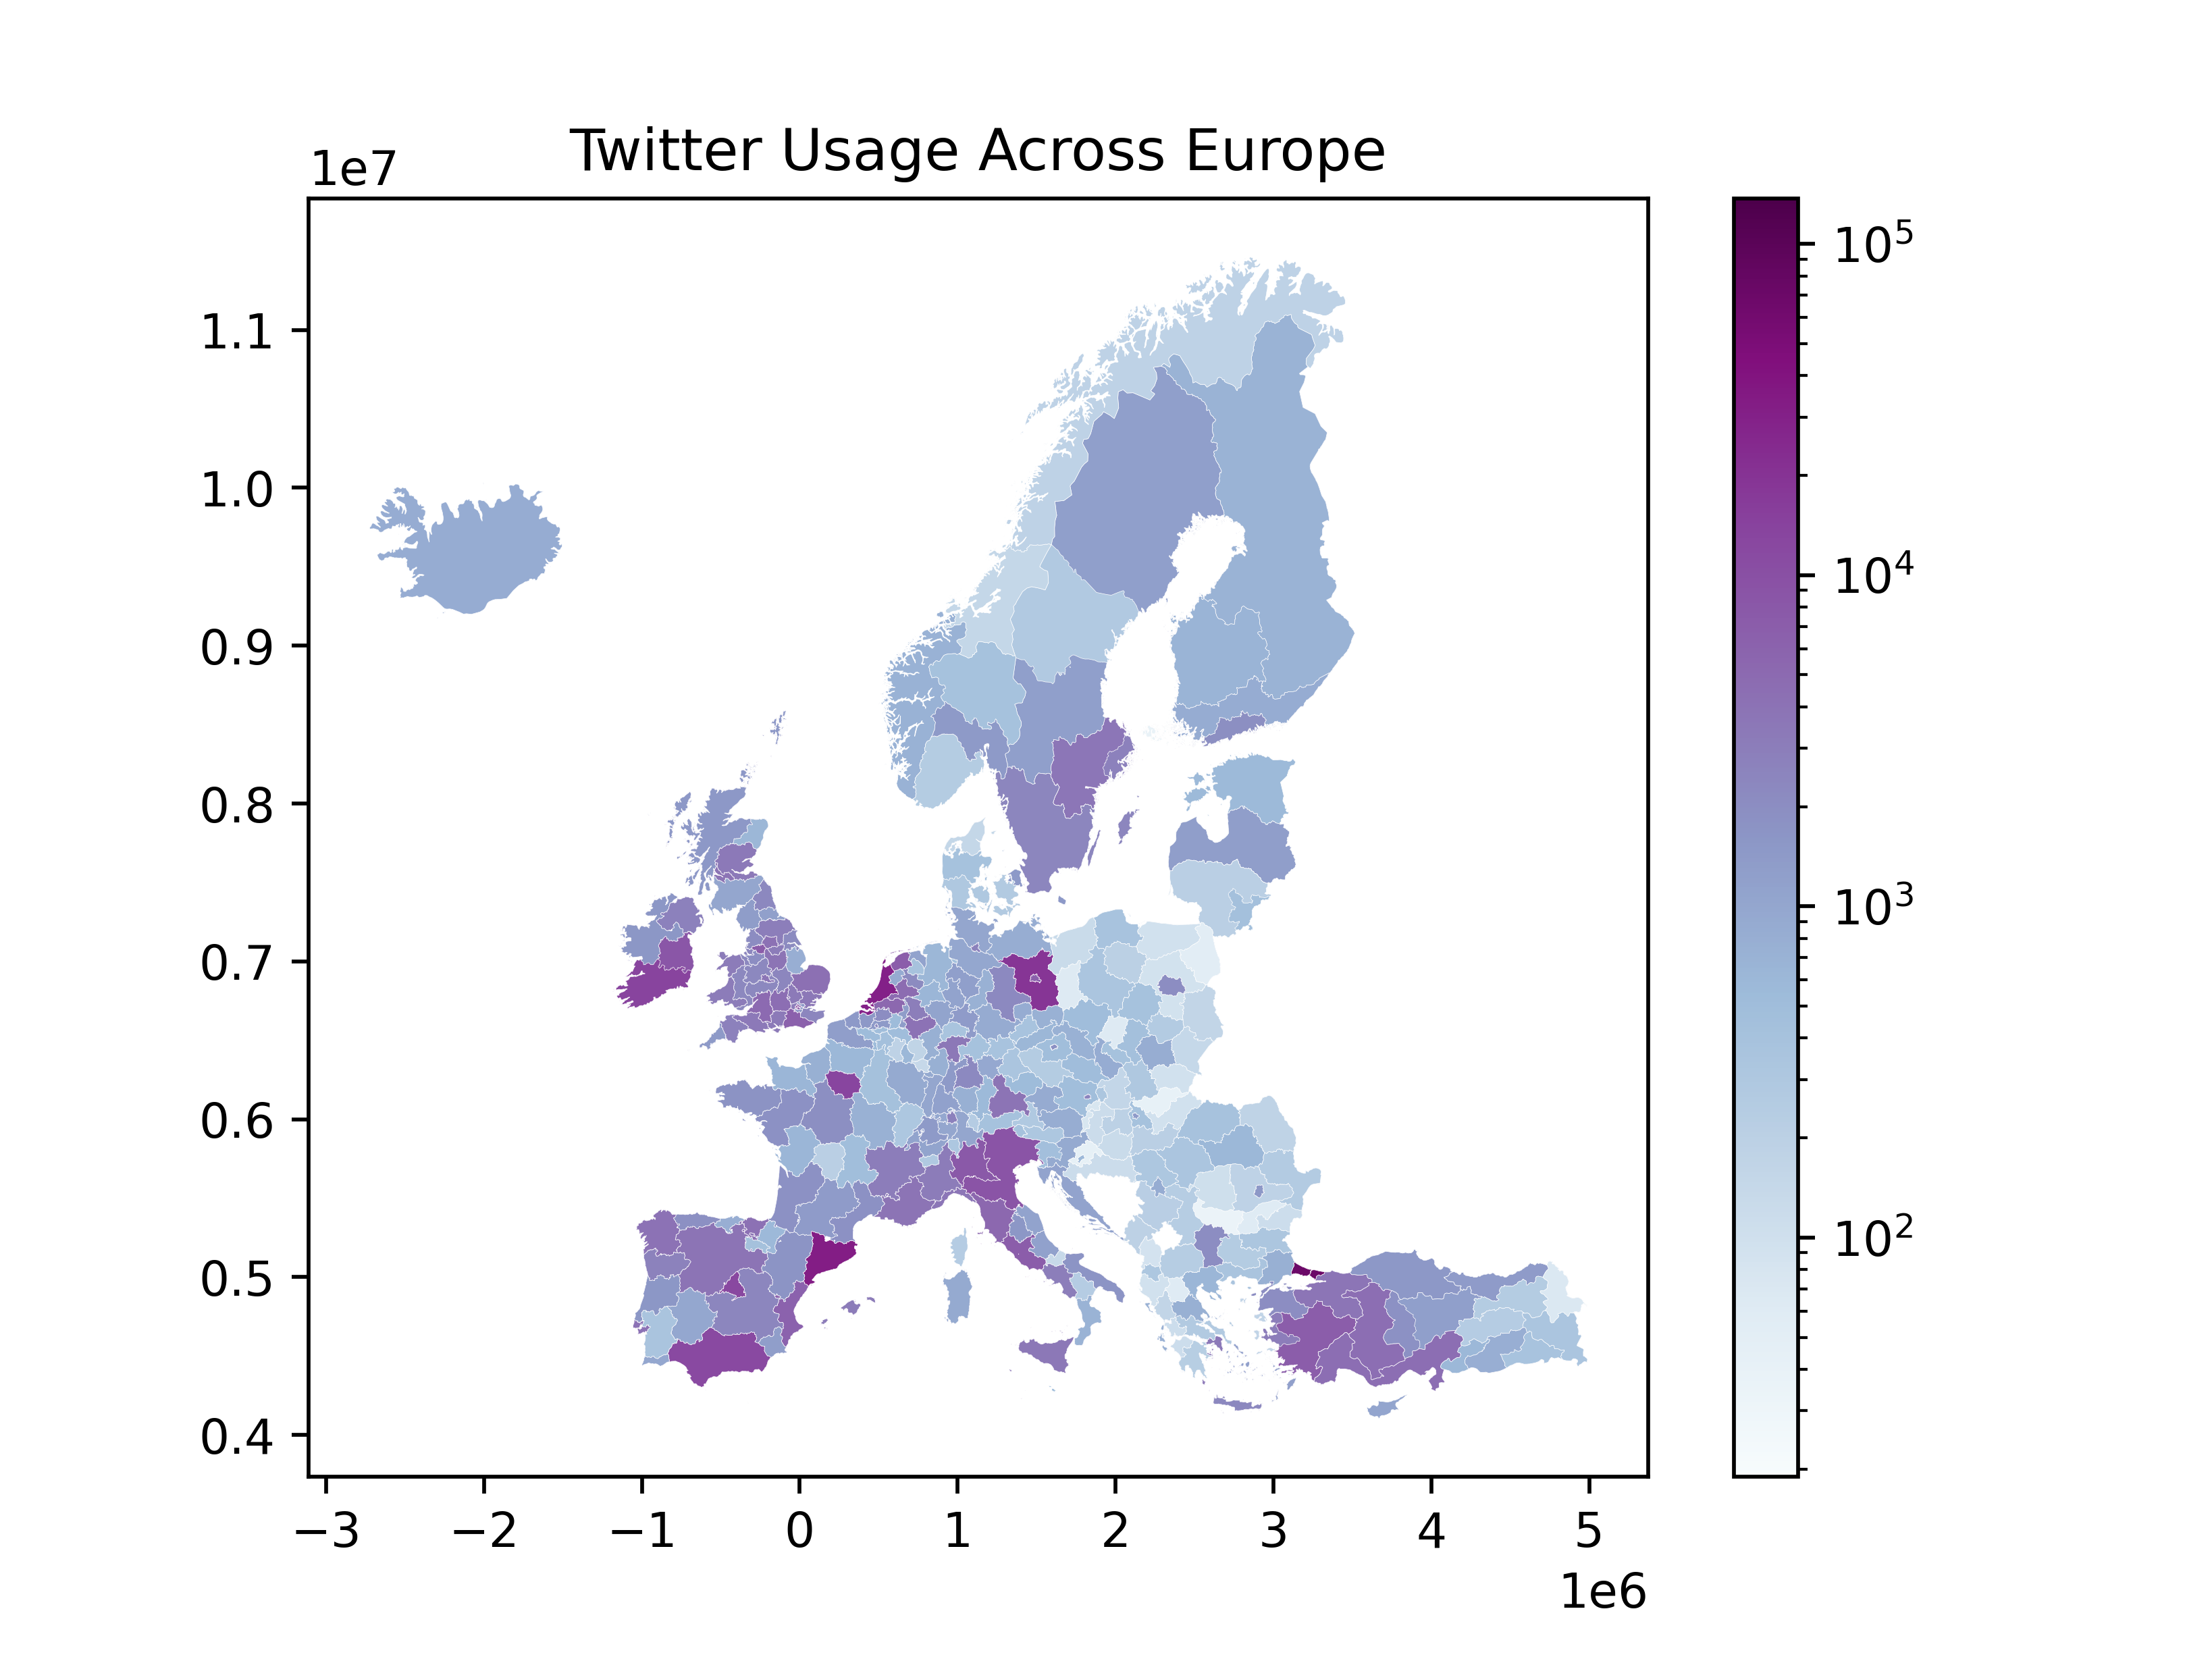 figure 3.1 Twitter usage across Europe